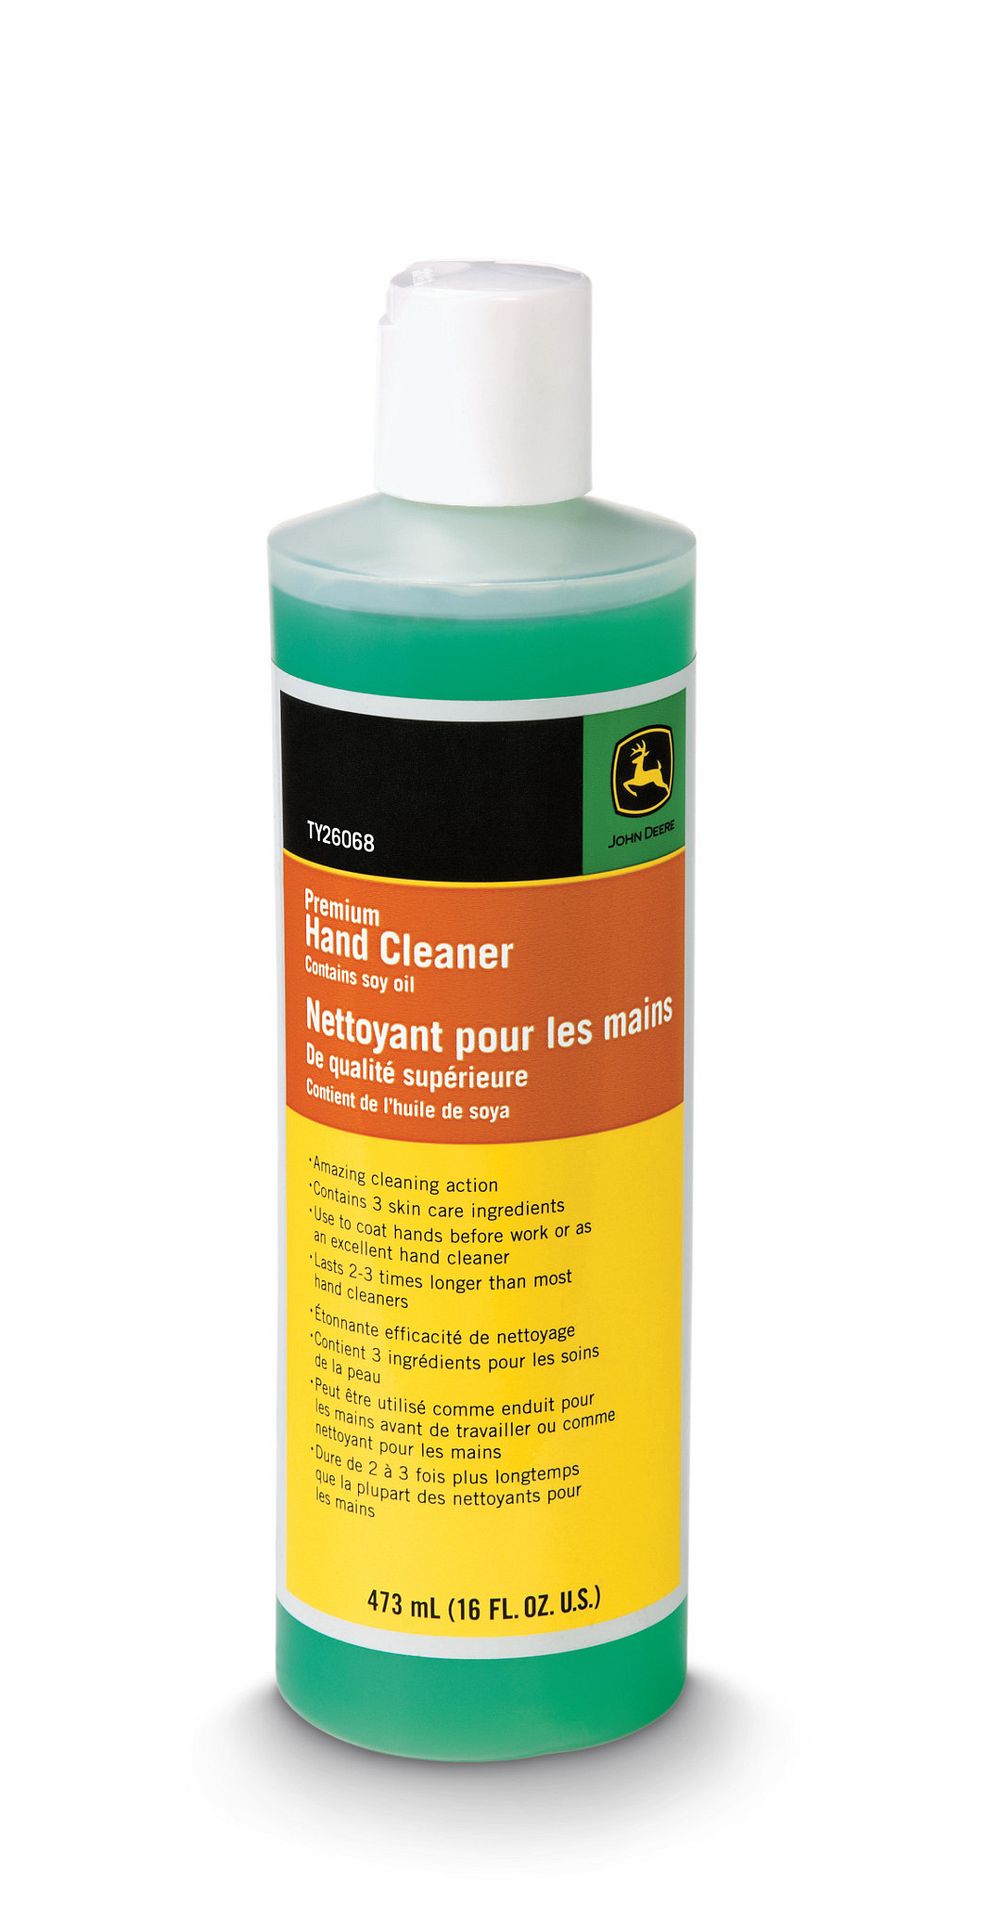 Premium Hand Cleaner - TY26068